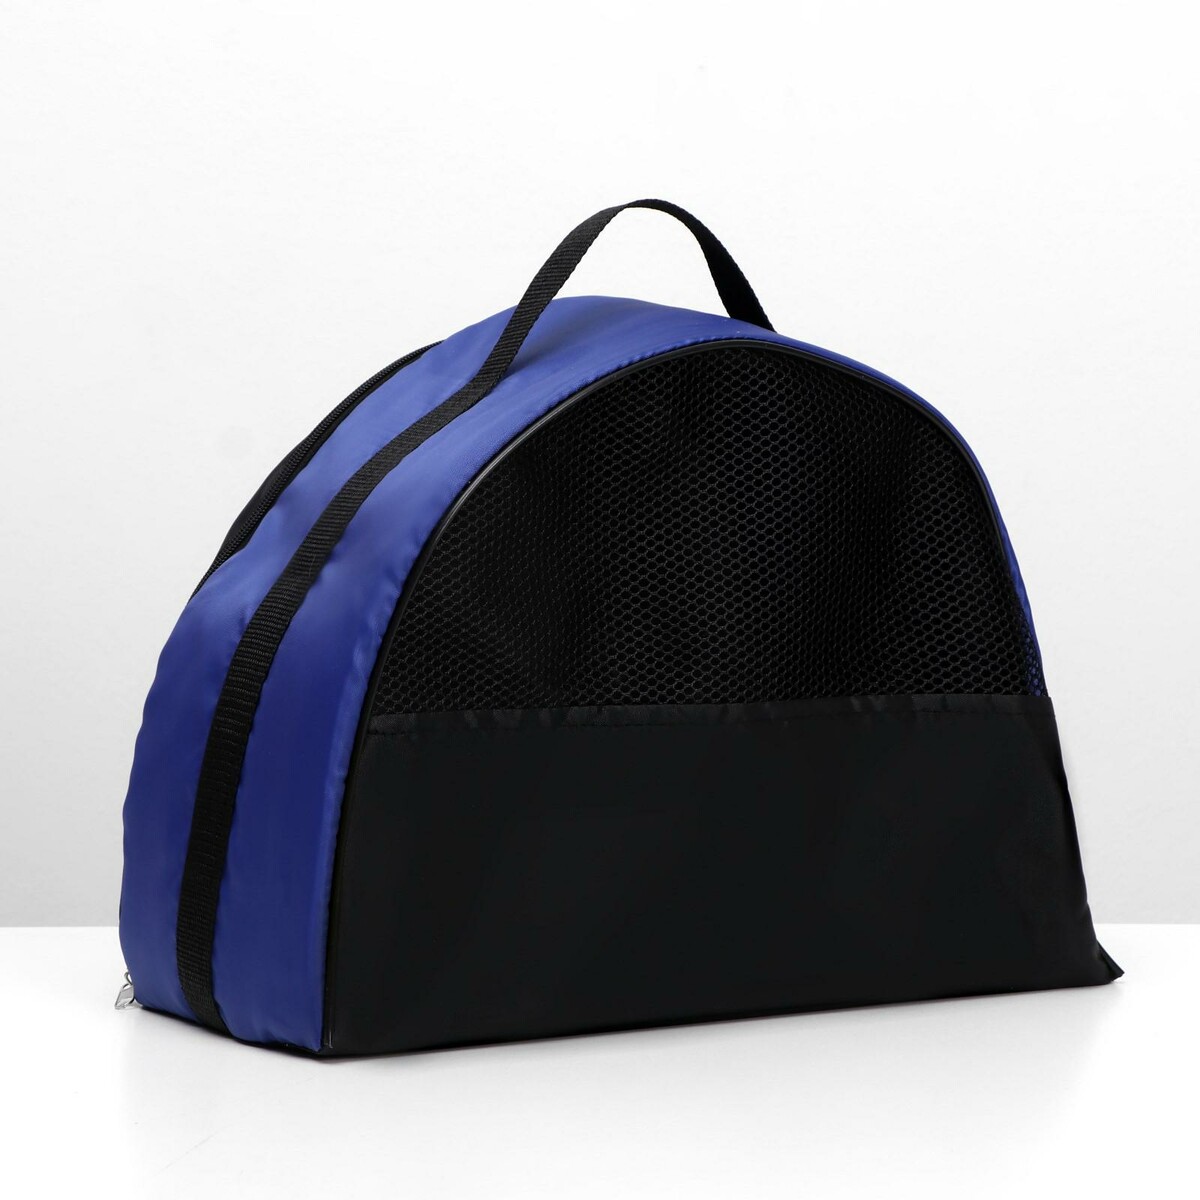 Сумка - переноска для животных, оксфорд, 39 х 19 х 27 см, синяя сумка переноска для животных оксфорд 42 х 22 х 29 см синяя